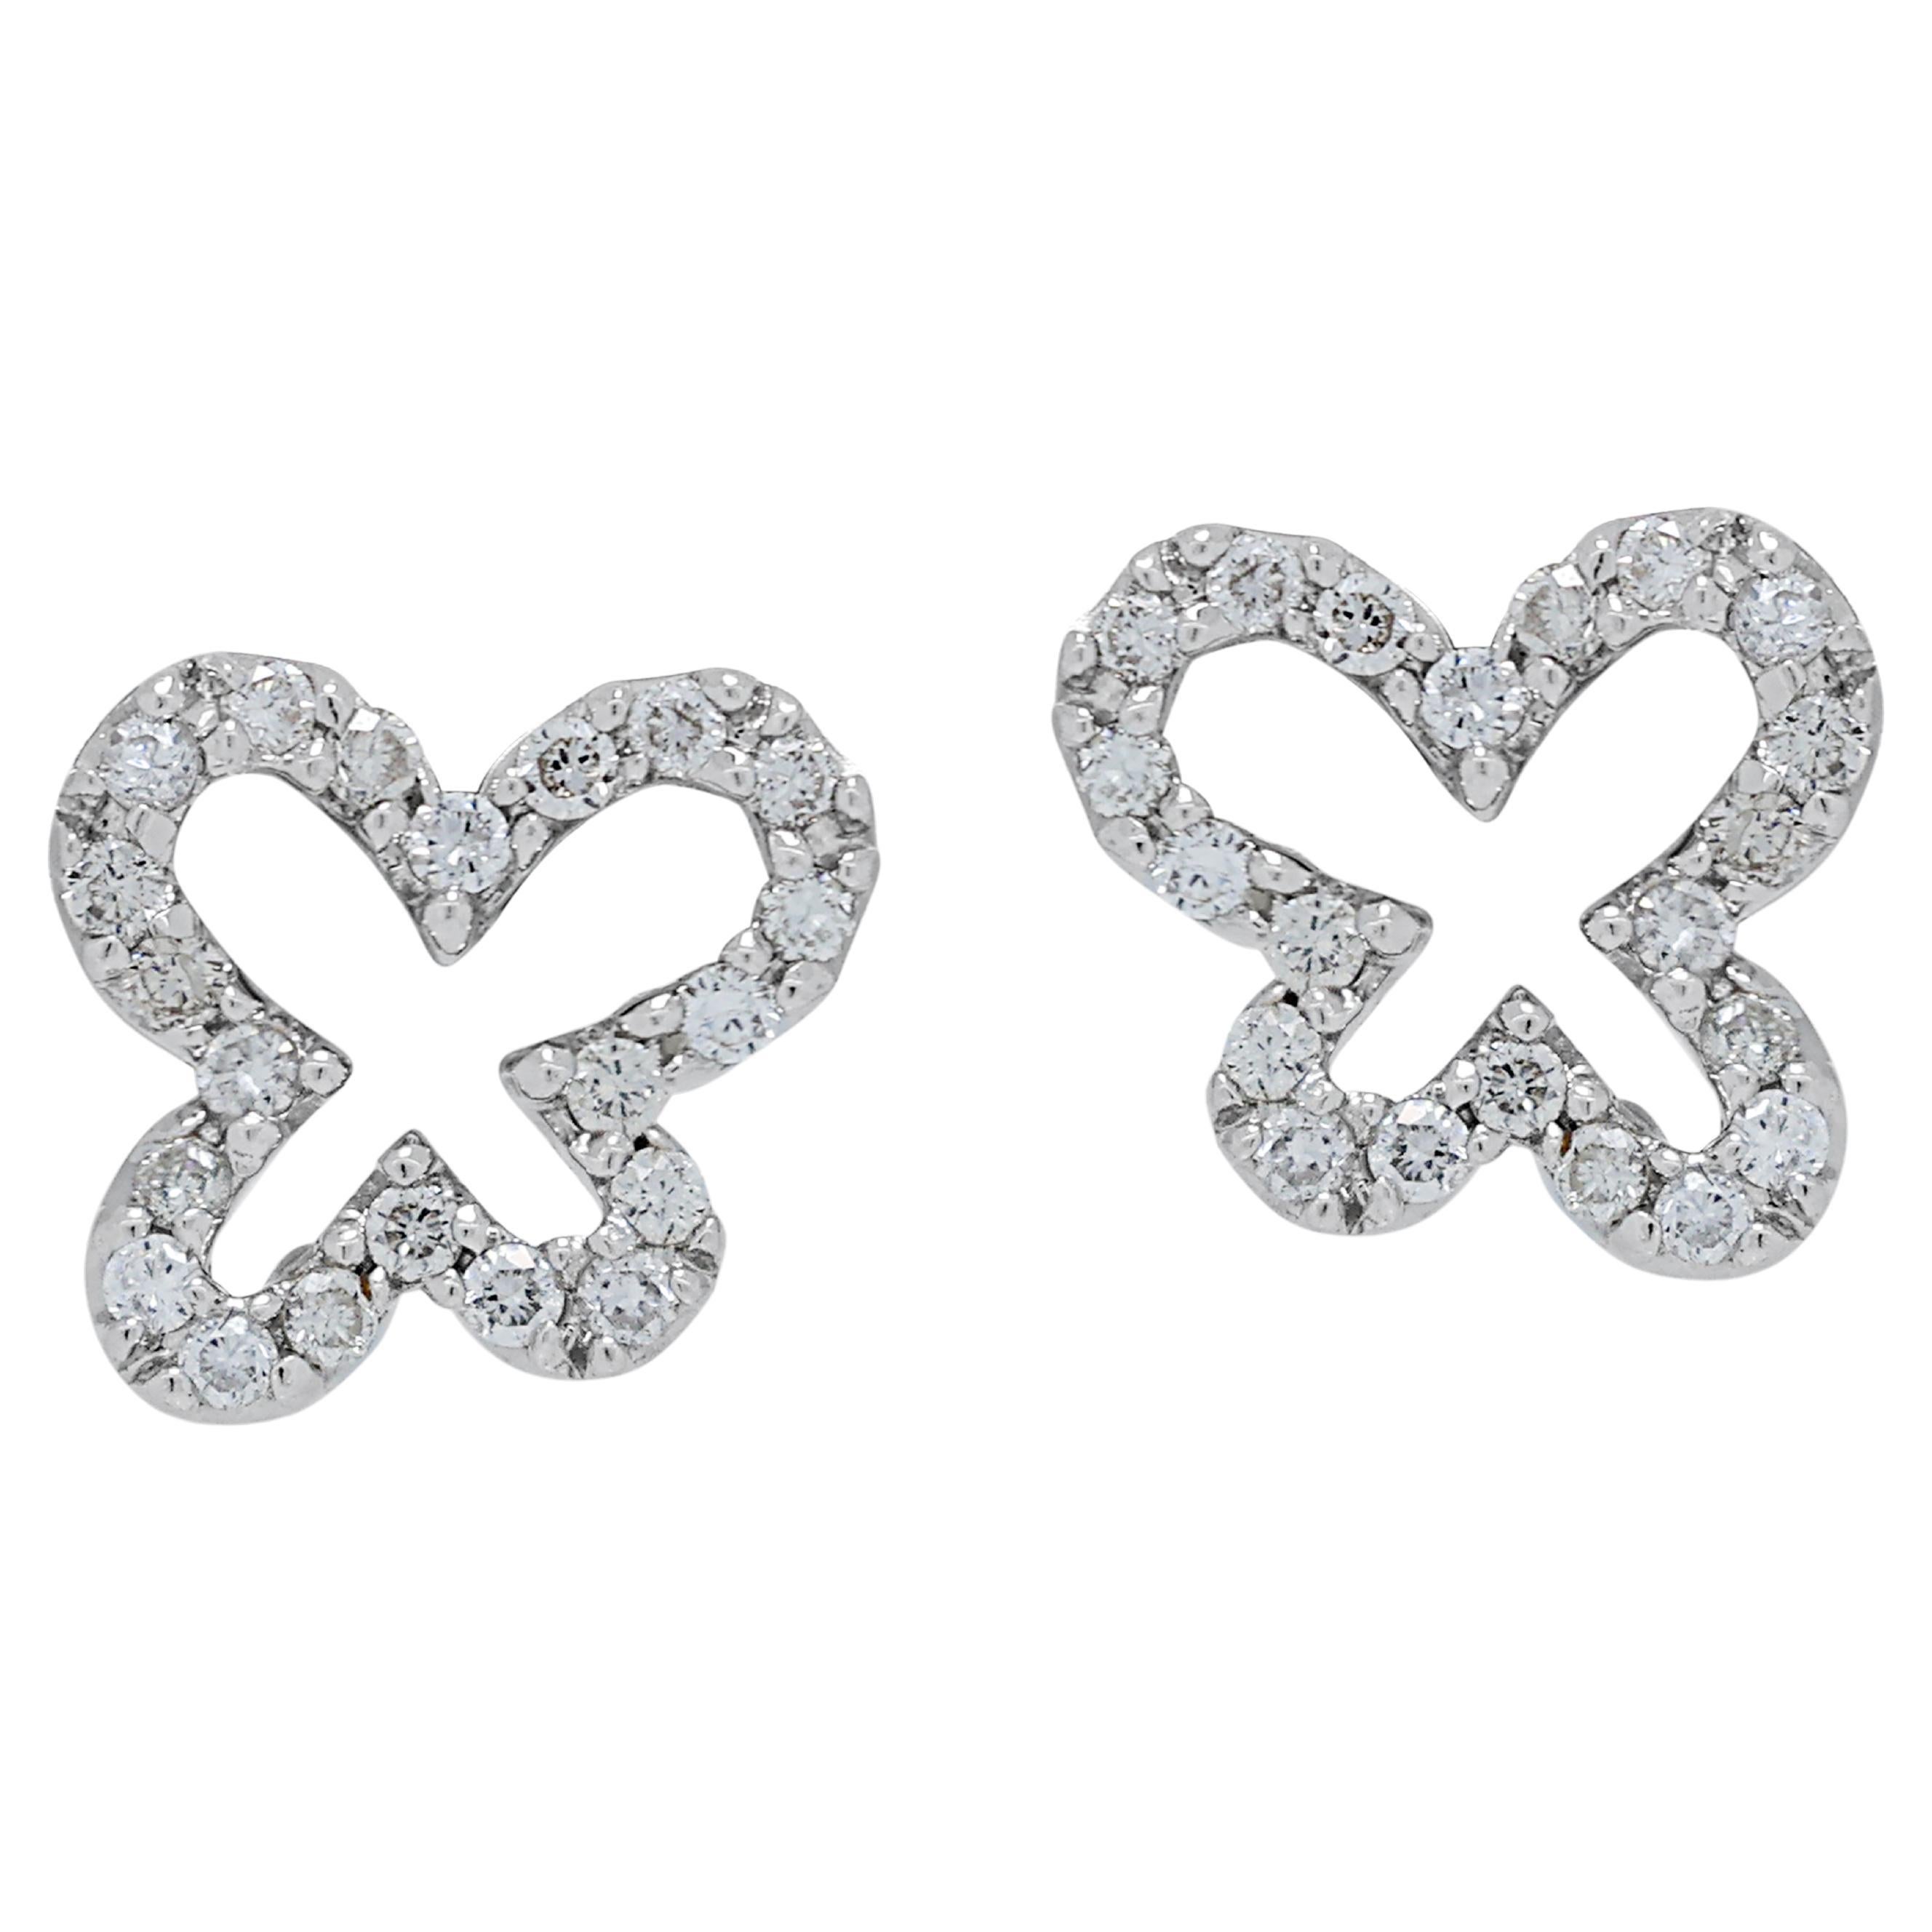 Stunning 0.29ct Diamonds Stud Earrings in 18K White Gold For Sale